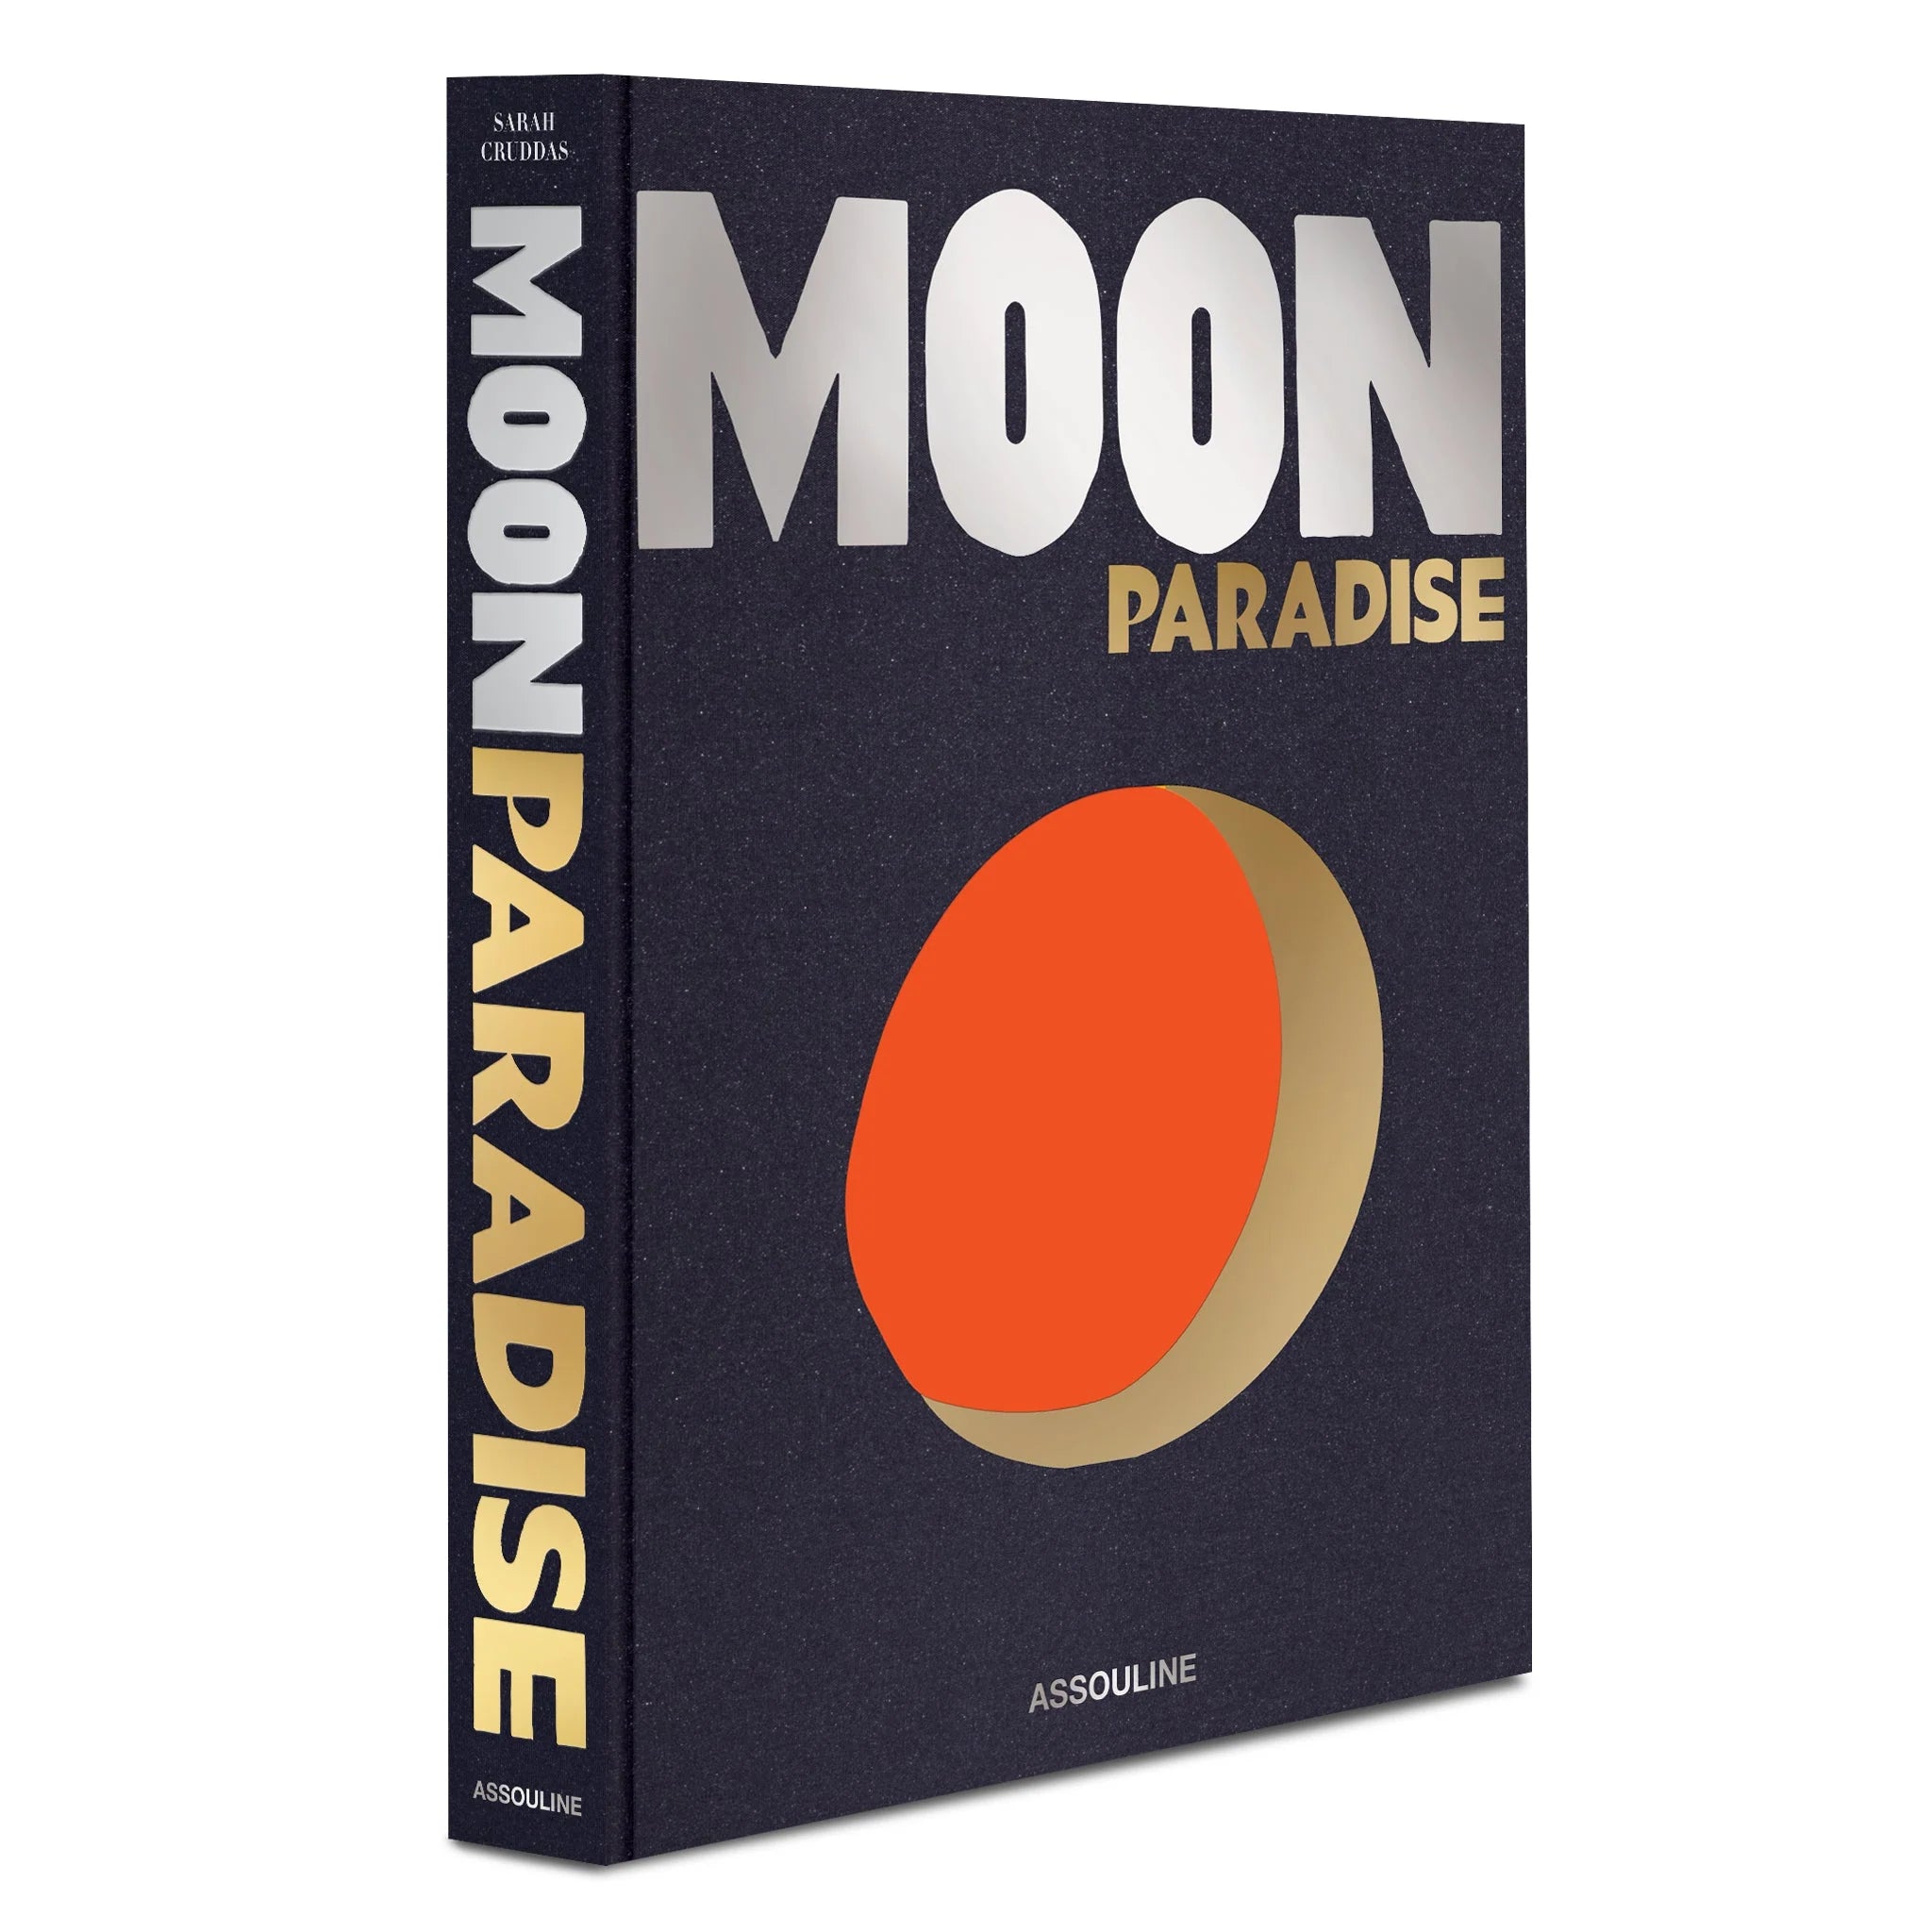 MOON PARADISE, libro sobre fotografía para decorar espacios interiores